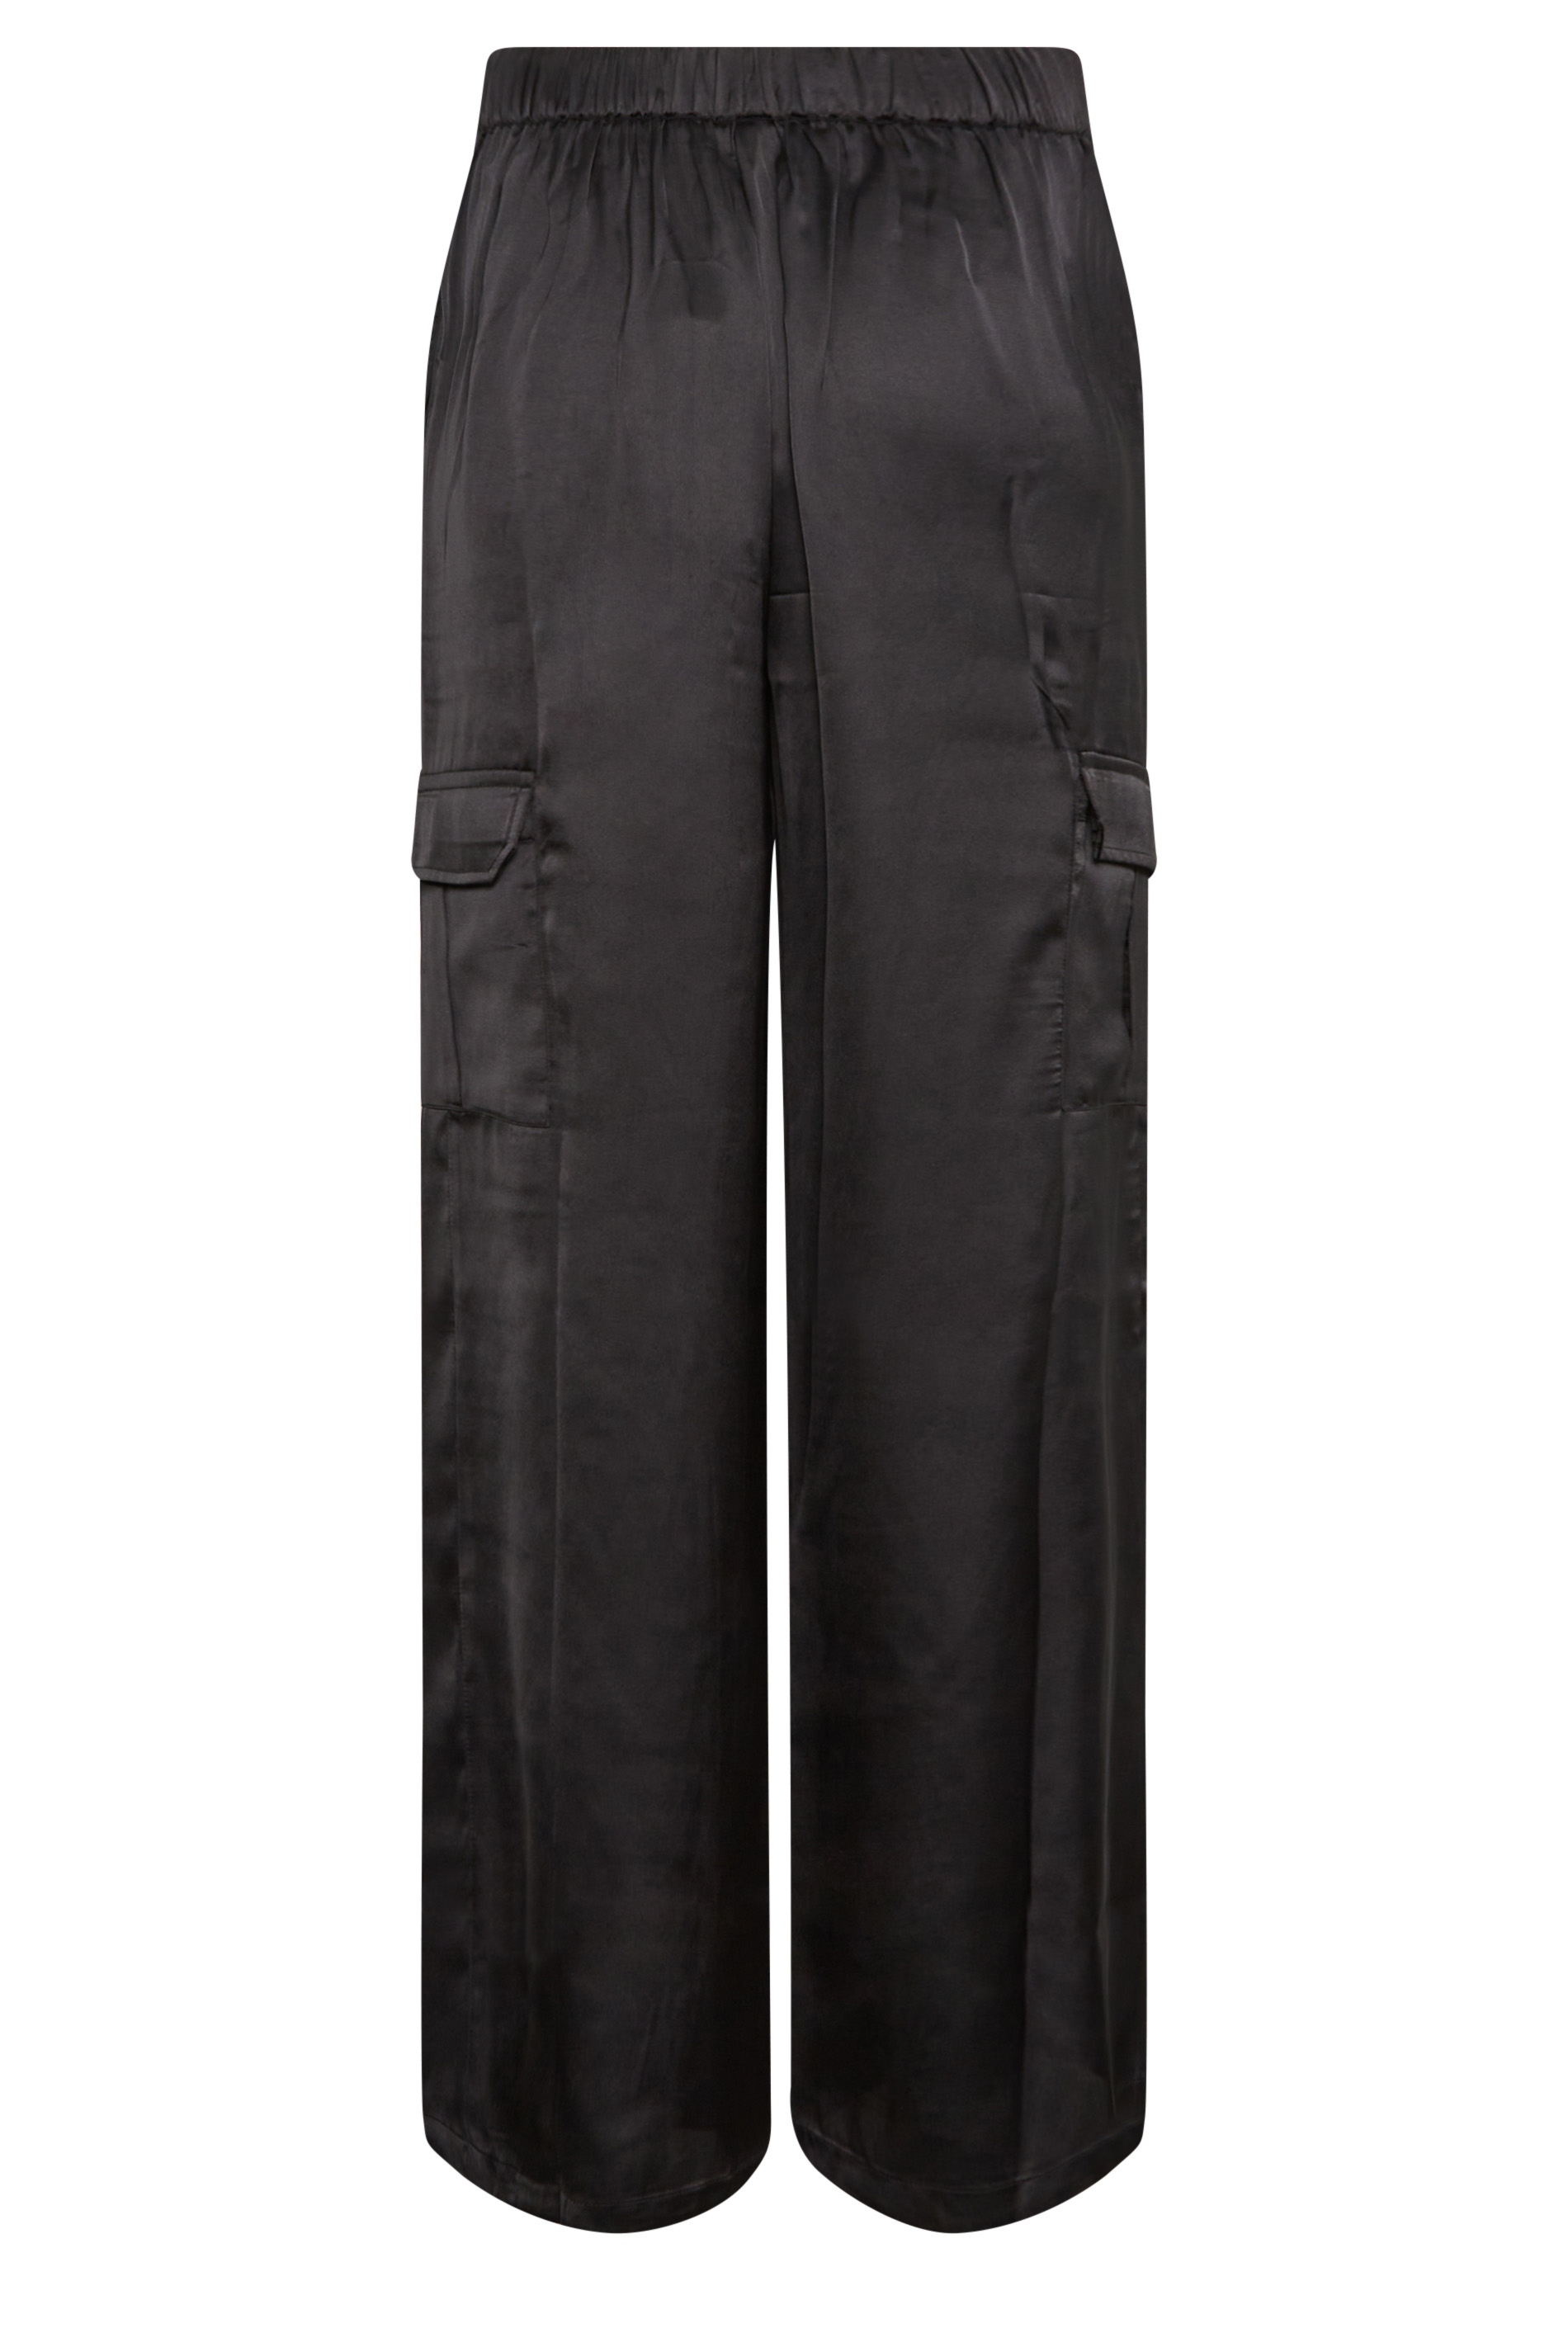 LTS Tall Women's Black Pinstripe Stretch Wide Leg Trousers | Long Tall Sally